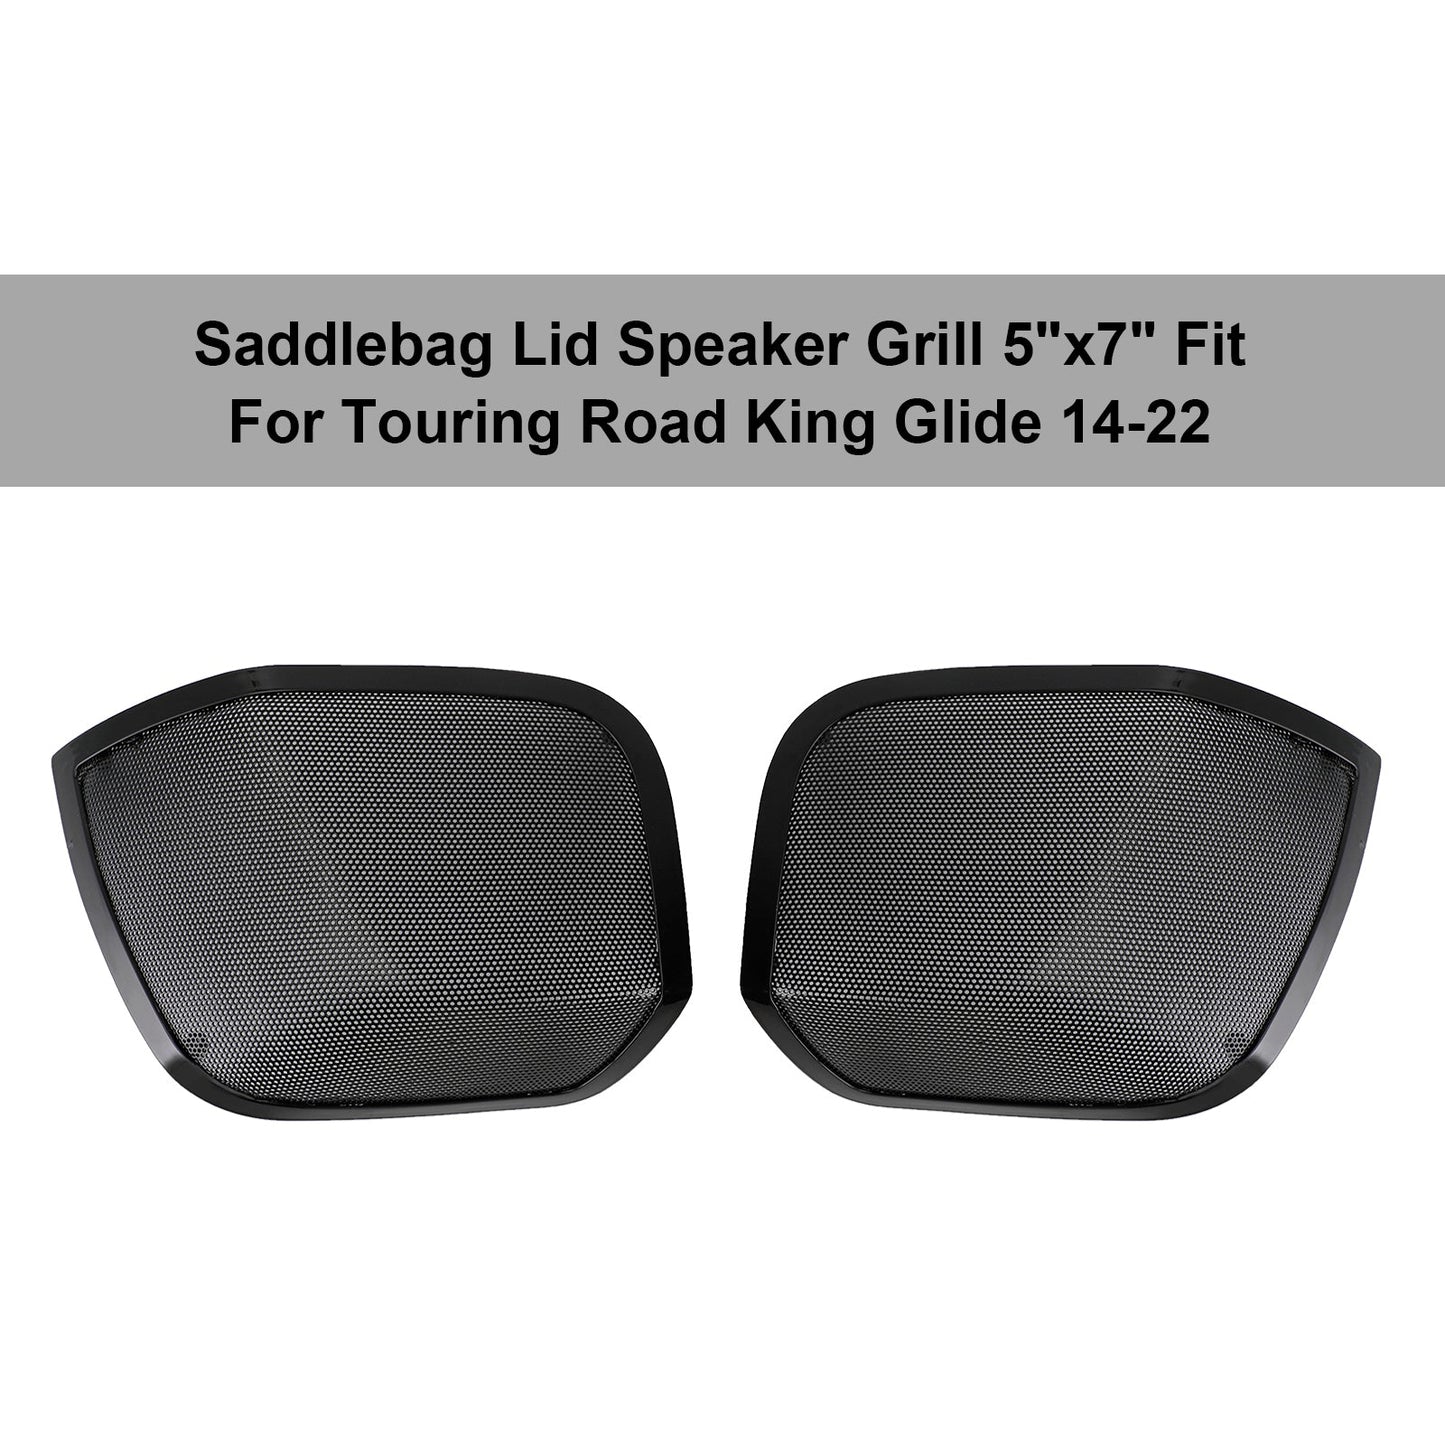 Saddlebag Lid Speaker Grill 5"X7" Fit For Touring Road King Glide 14-22